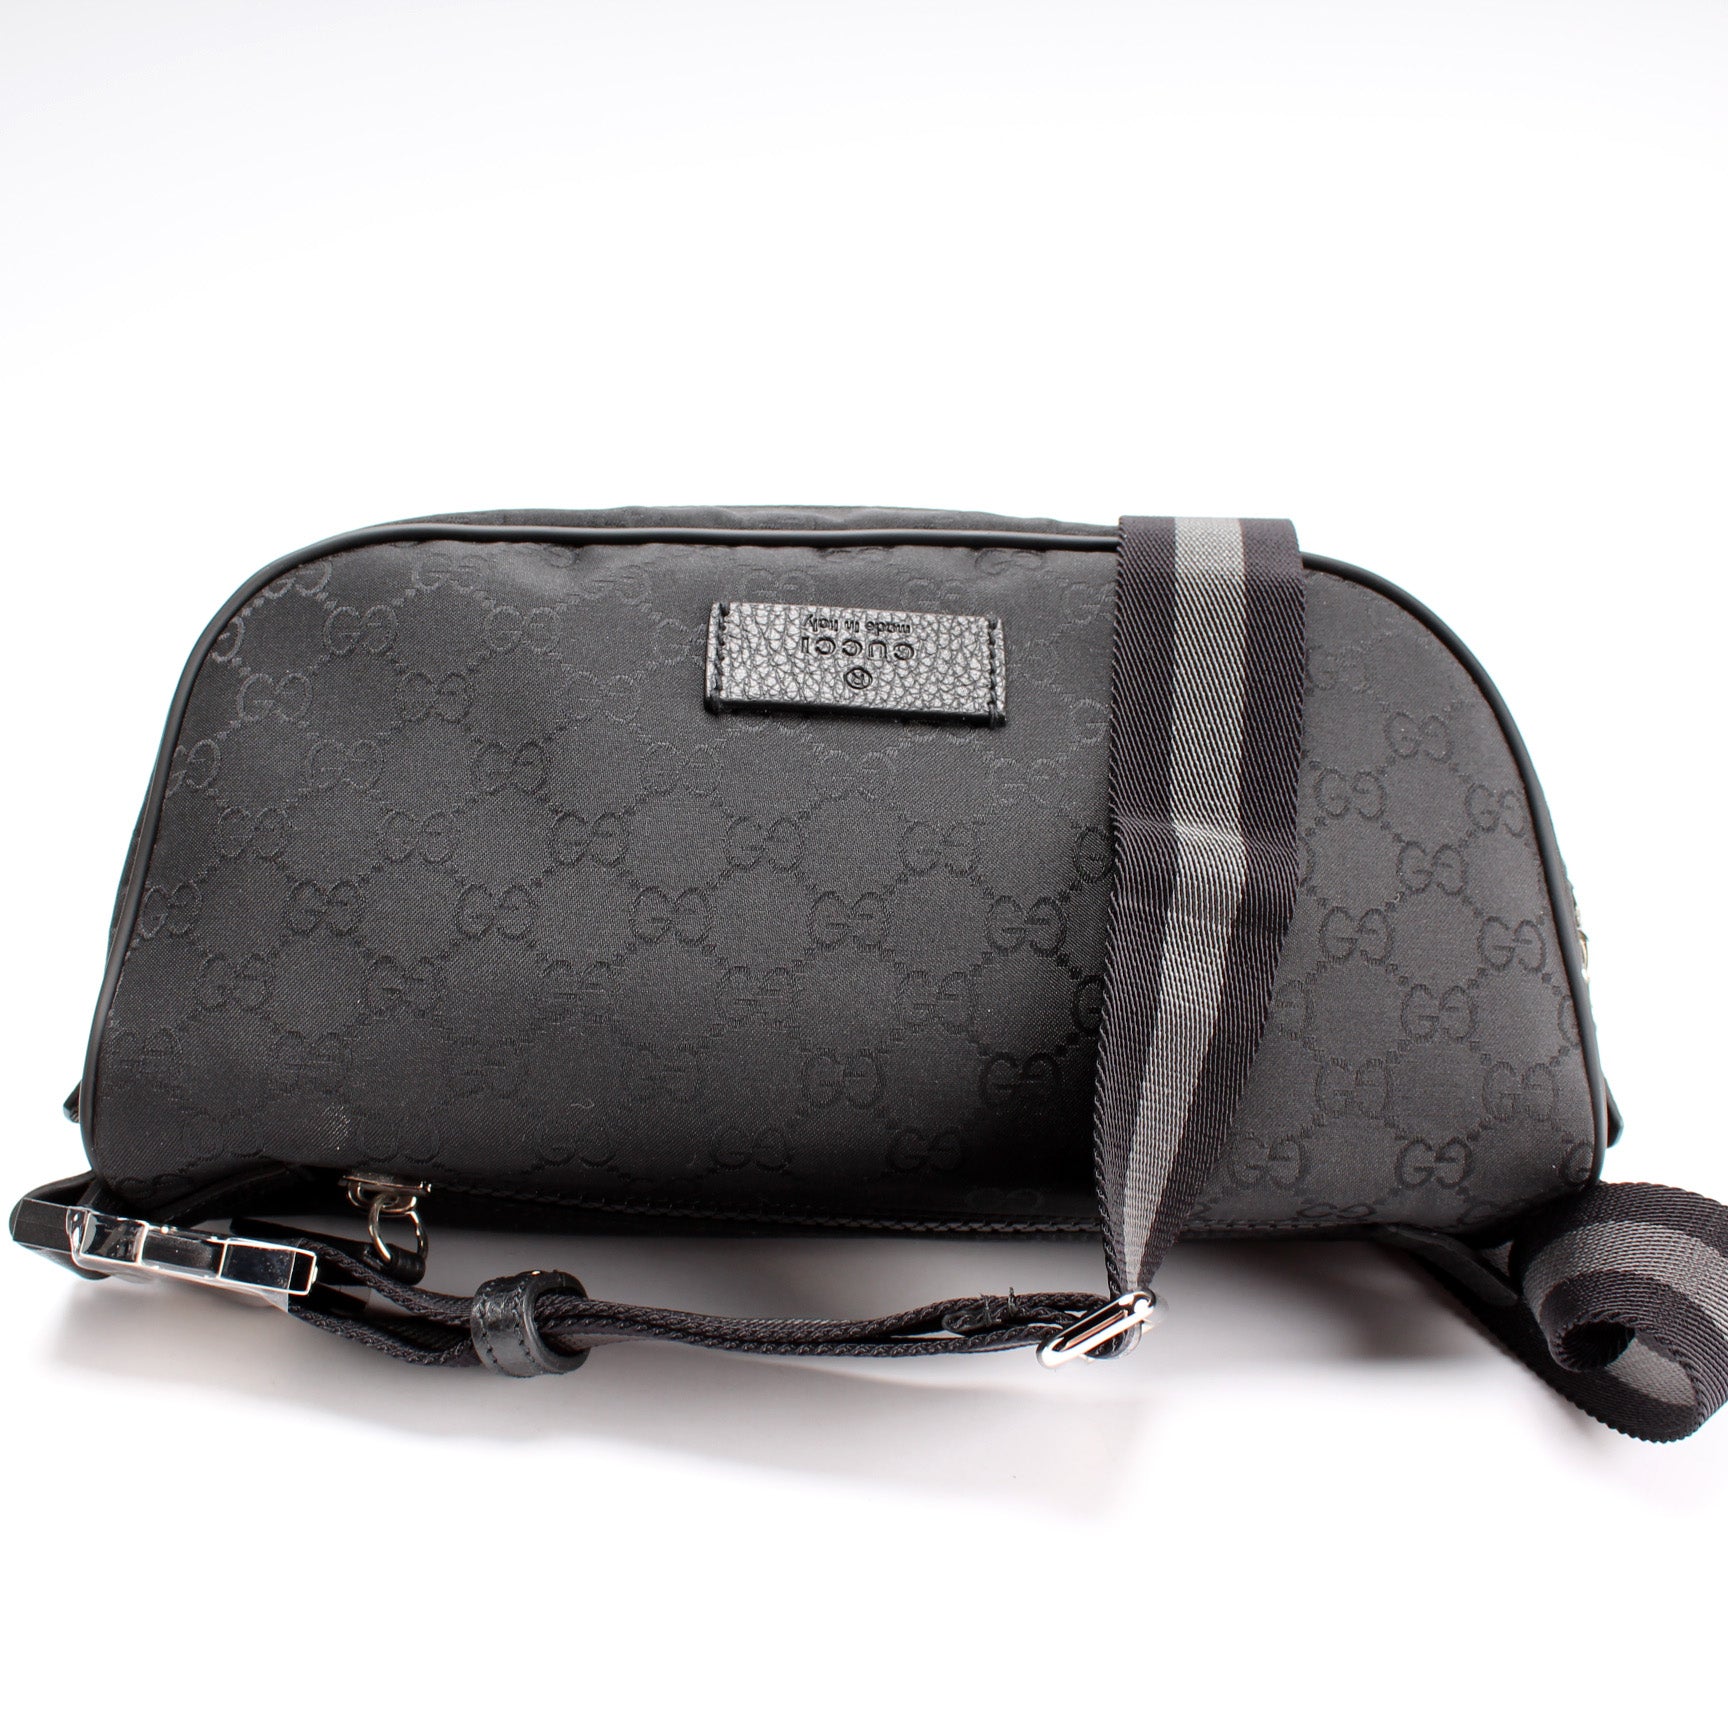 Authenticated Used Gucci Body Bag Black Silver GG Nylon 449182